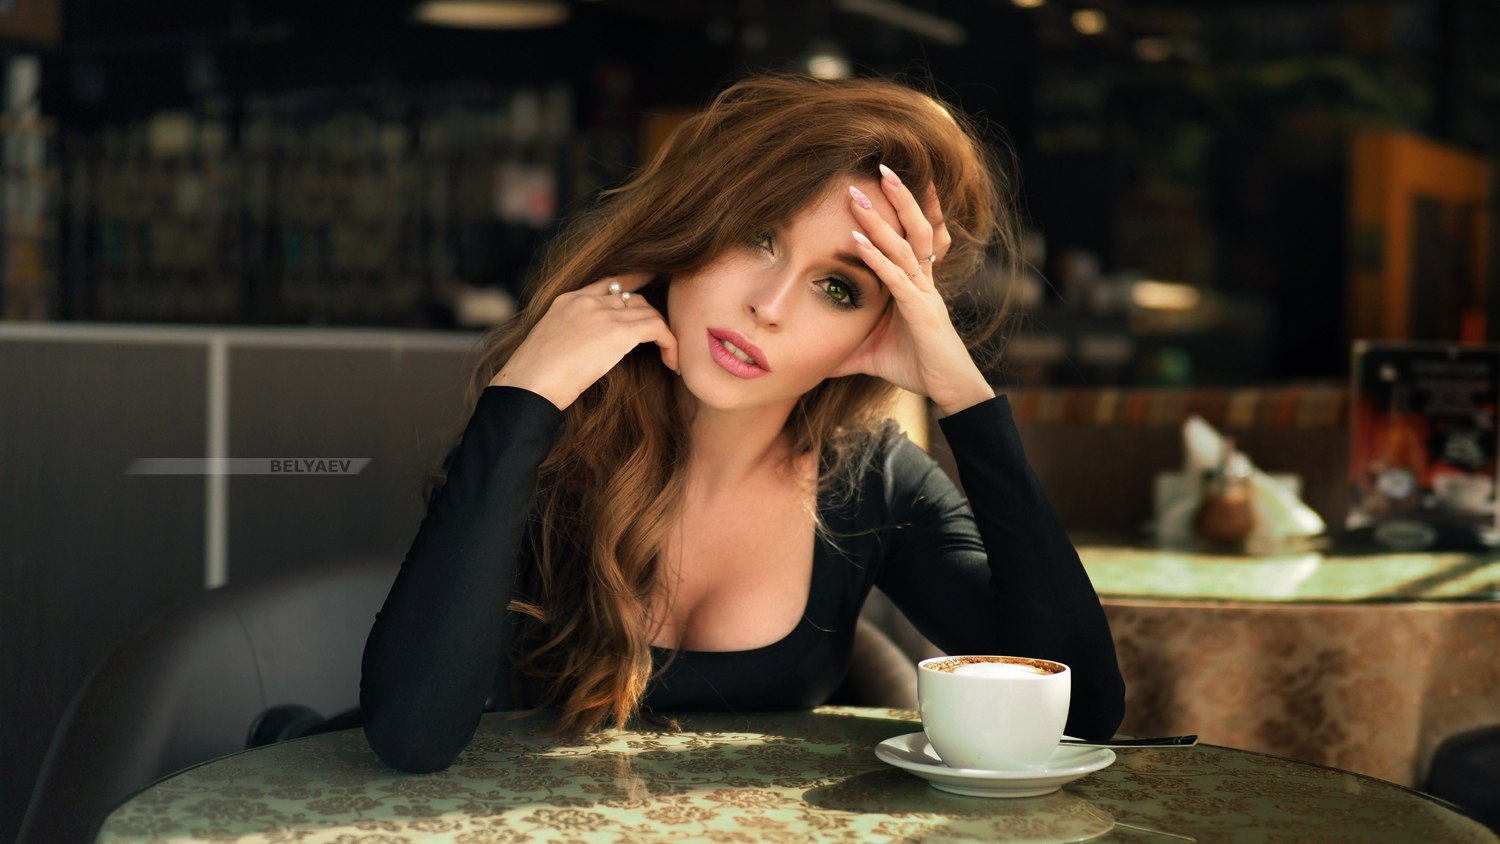 Women Brunette Green Eyes Black Clothing Face Portrait Coffee Hand On Face Dmitry Belyaev Pink Lipst 1500x844